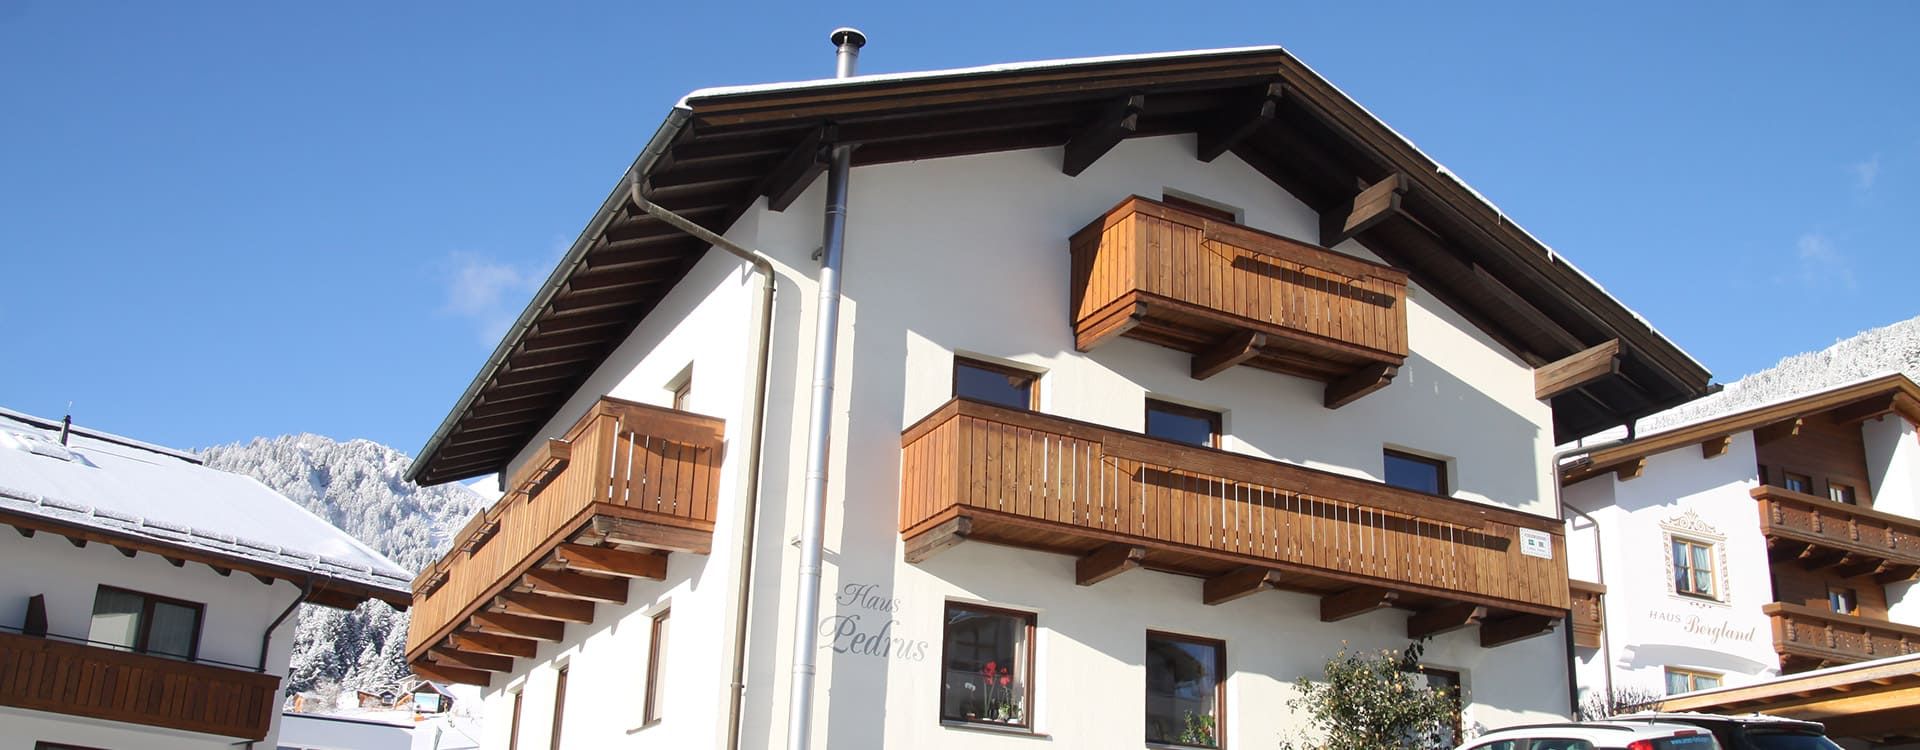 Haus Pedrus Fiss Urlaub Tirol